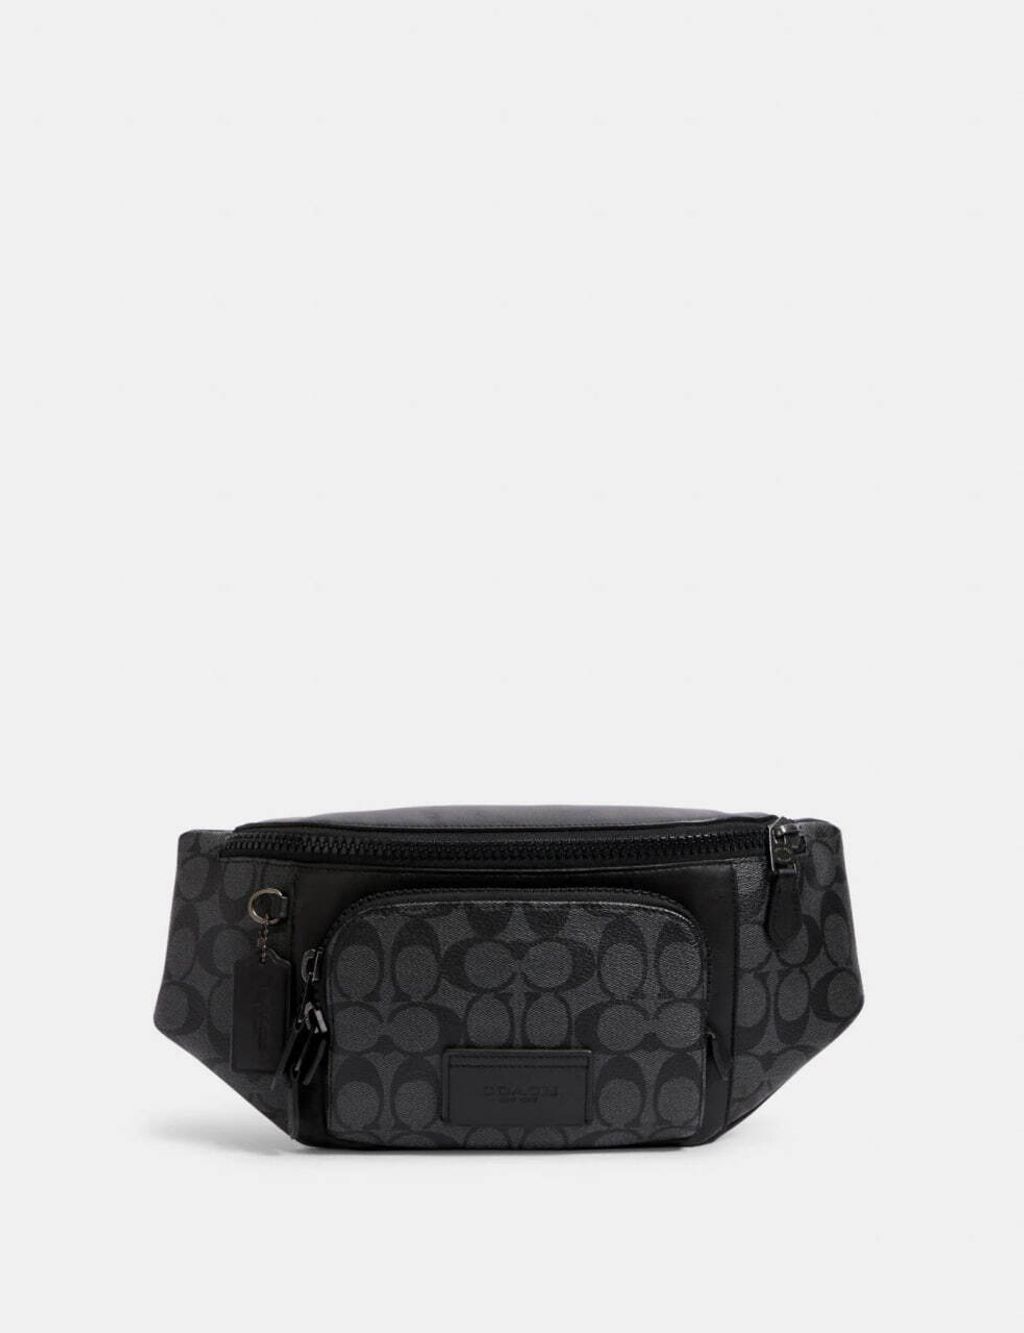 handbagbranded.com getlush outlet personalshopper usa malaysia ready stock Coach Track Beltbag BLACK